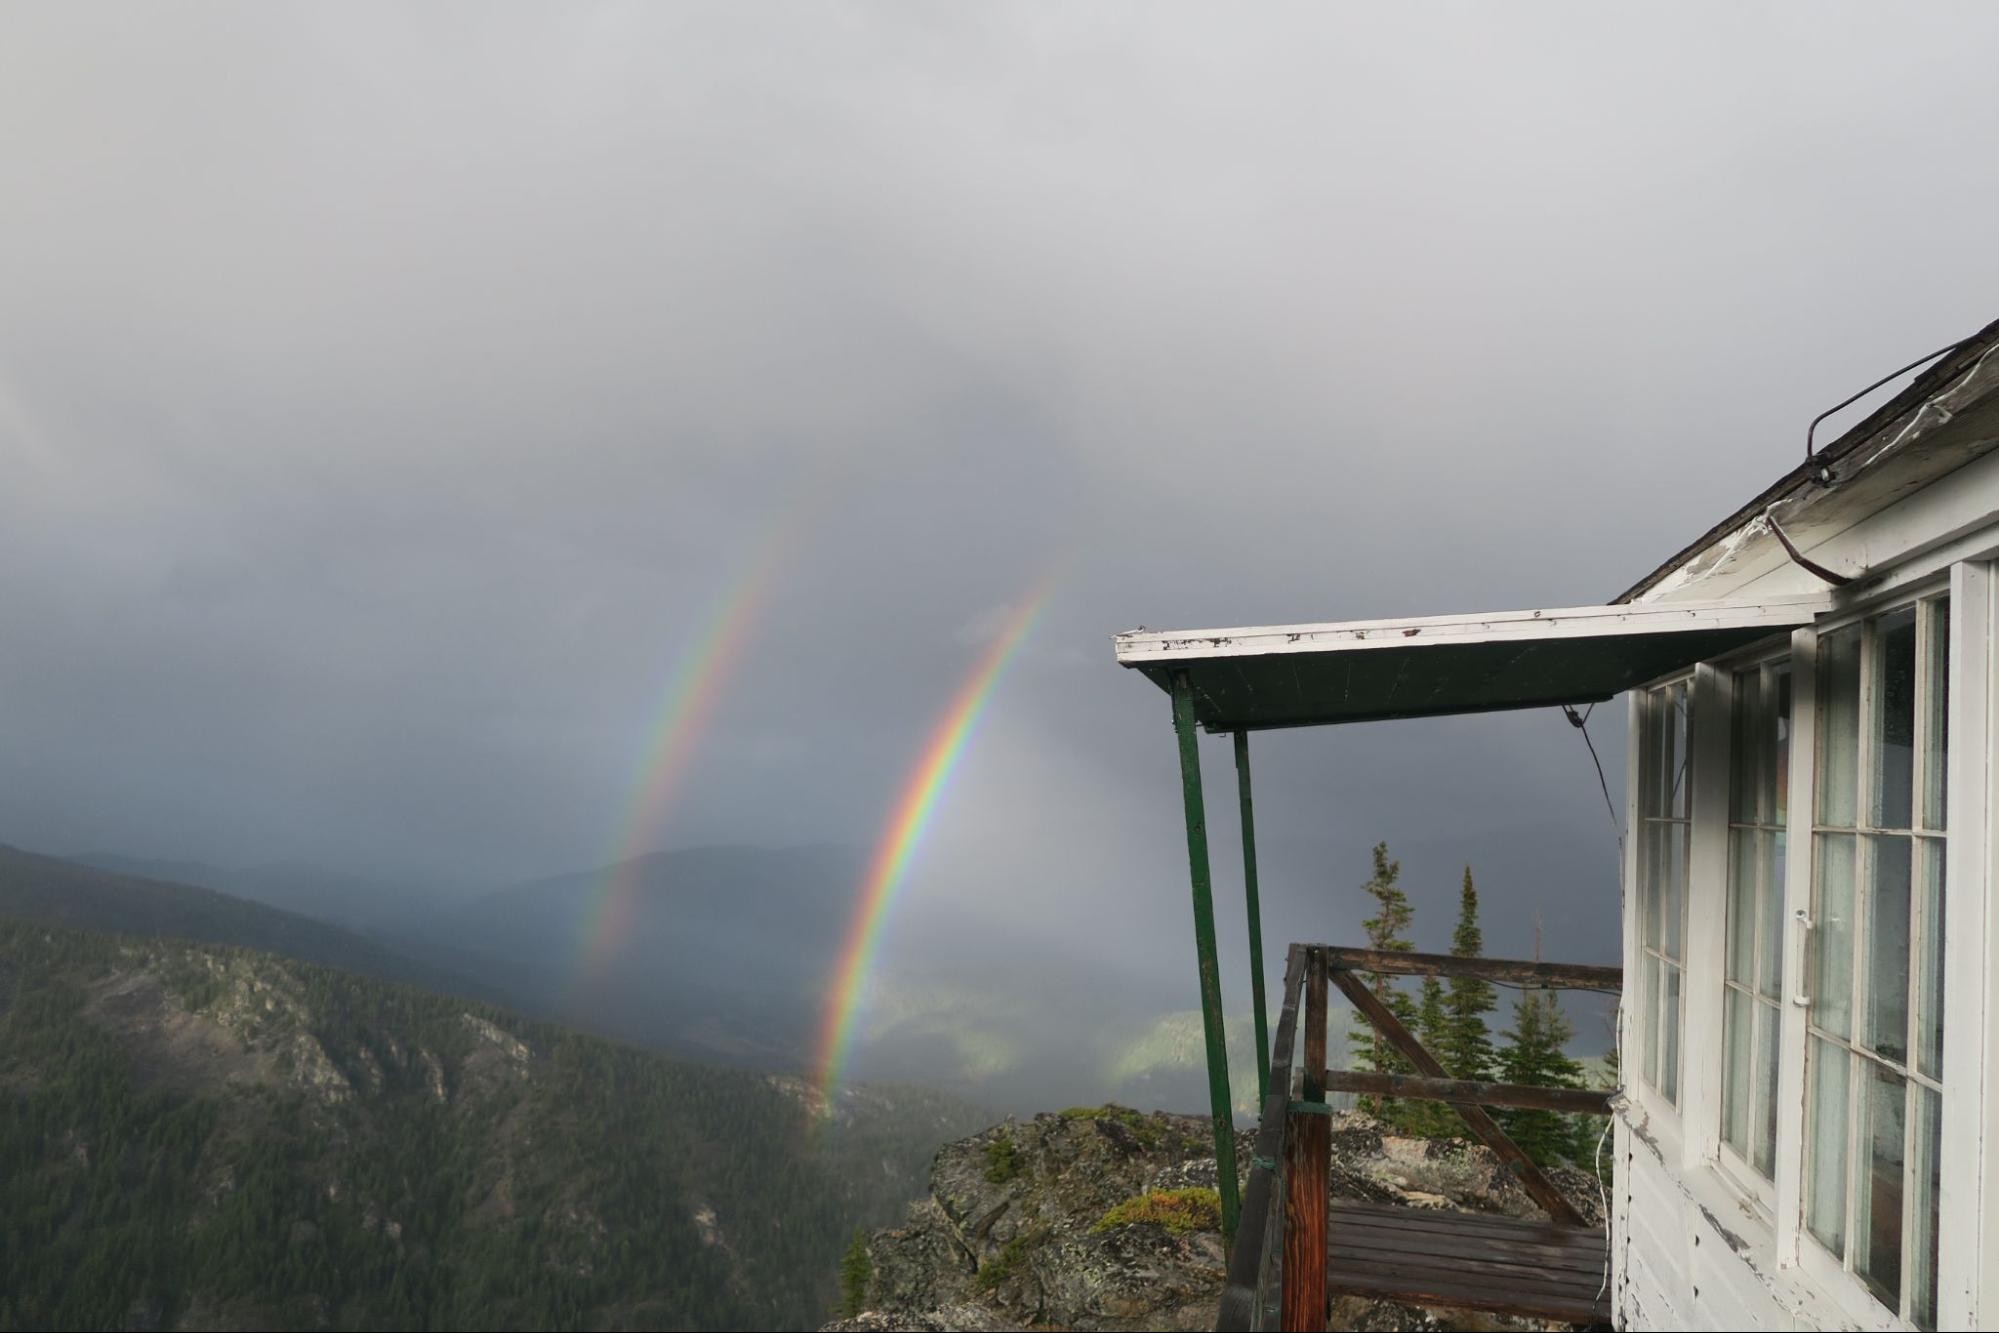 a rainbow appears over a house on a cloudy day